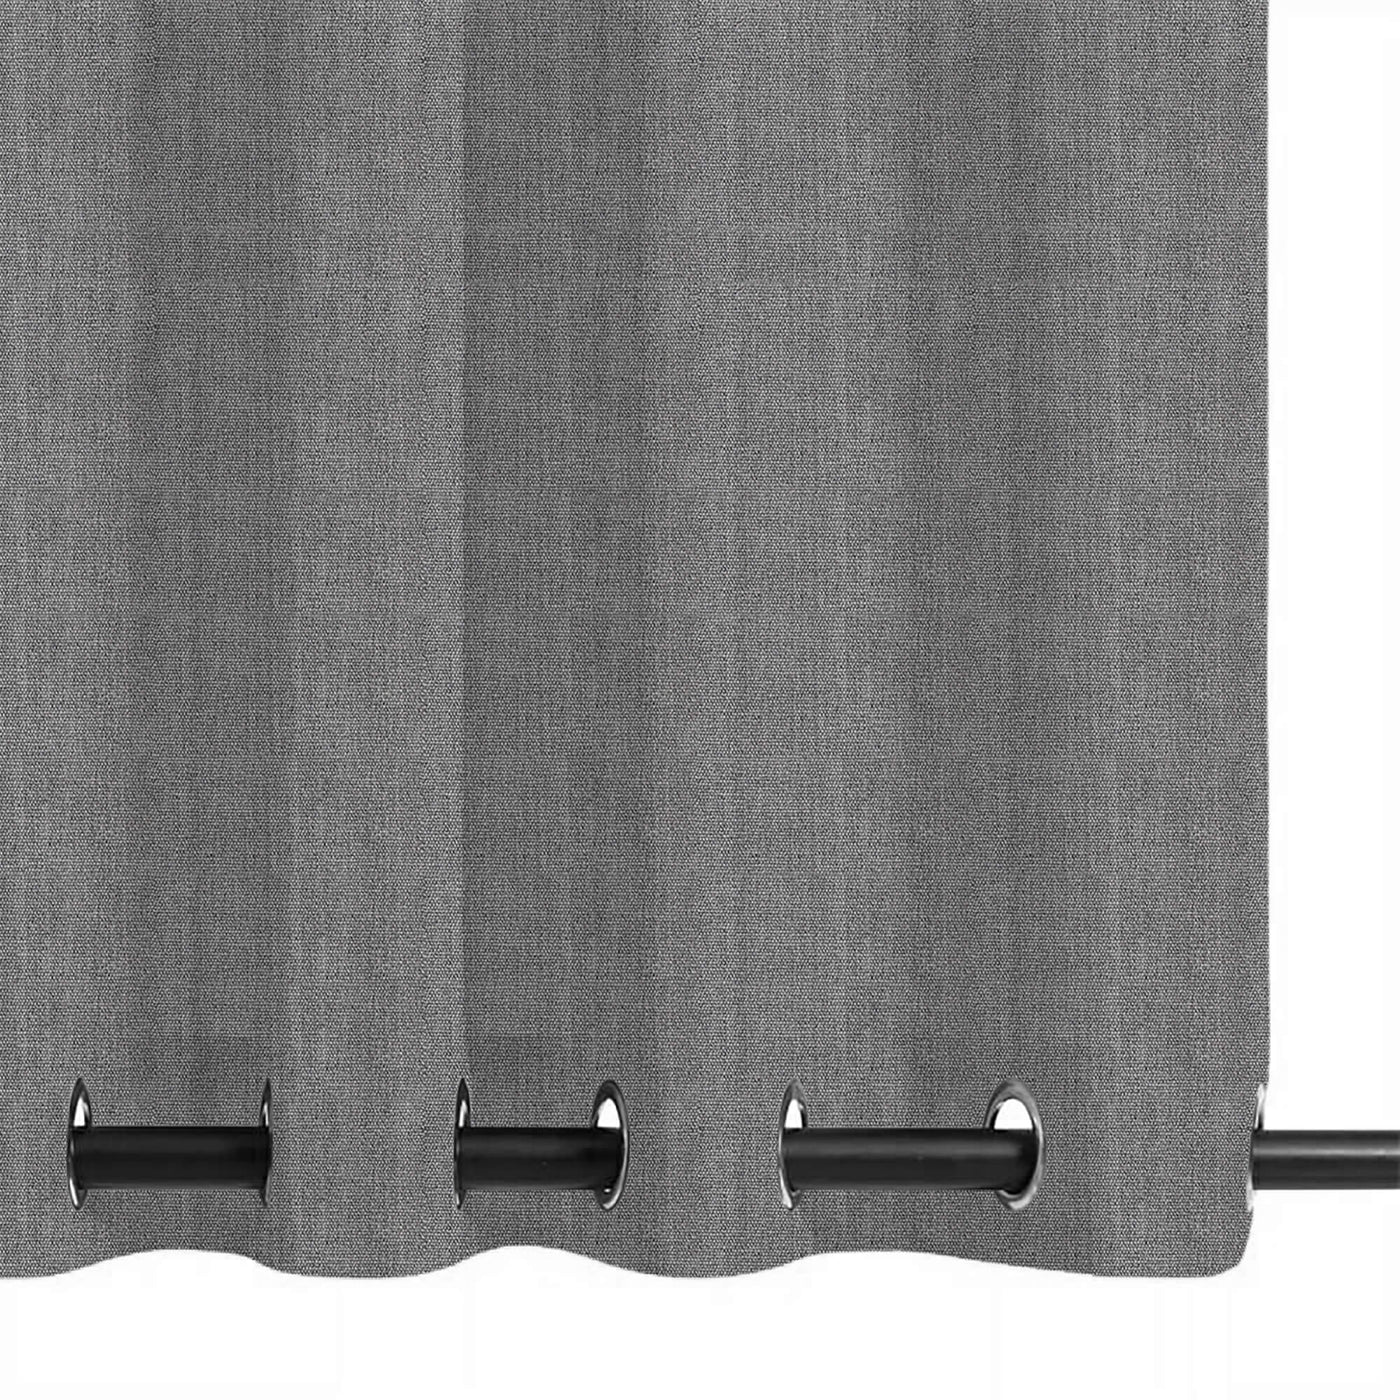 PENGI Outdoor Curtains Waterproof- Mix Limestone